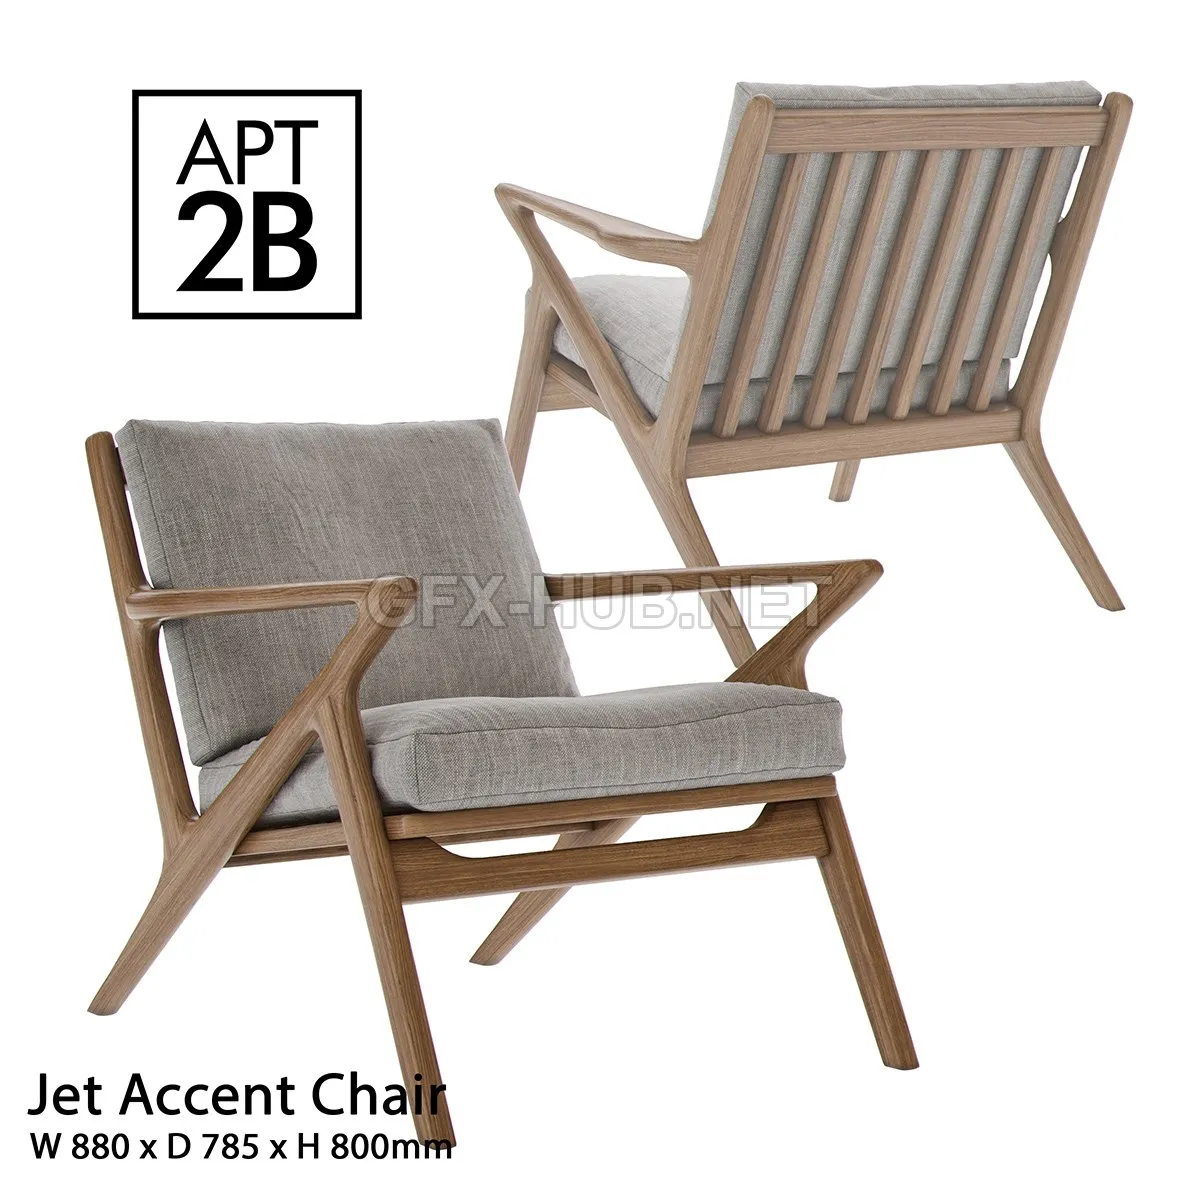 Apt2B Jet Accent Chair – 3922